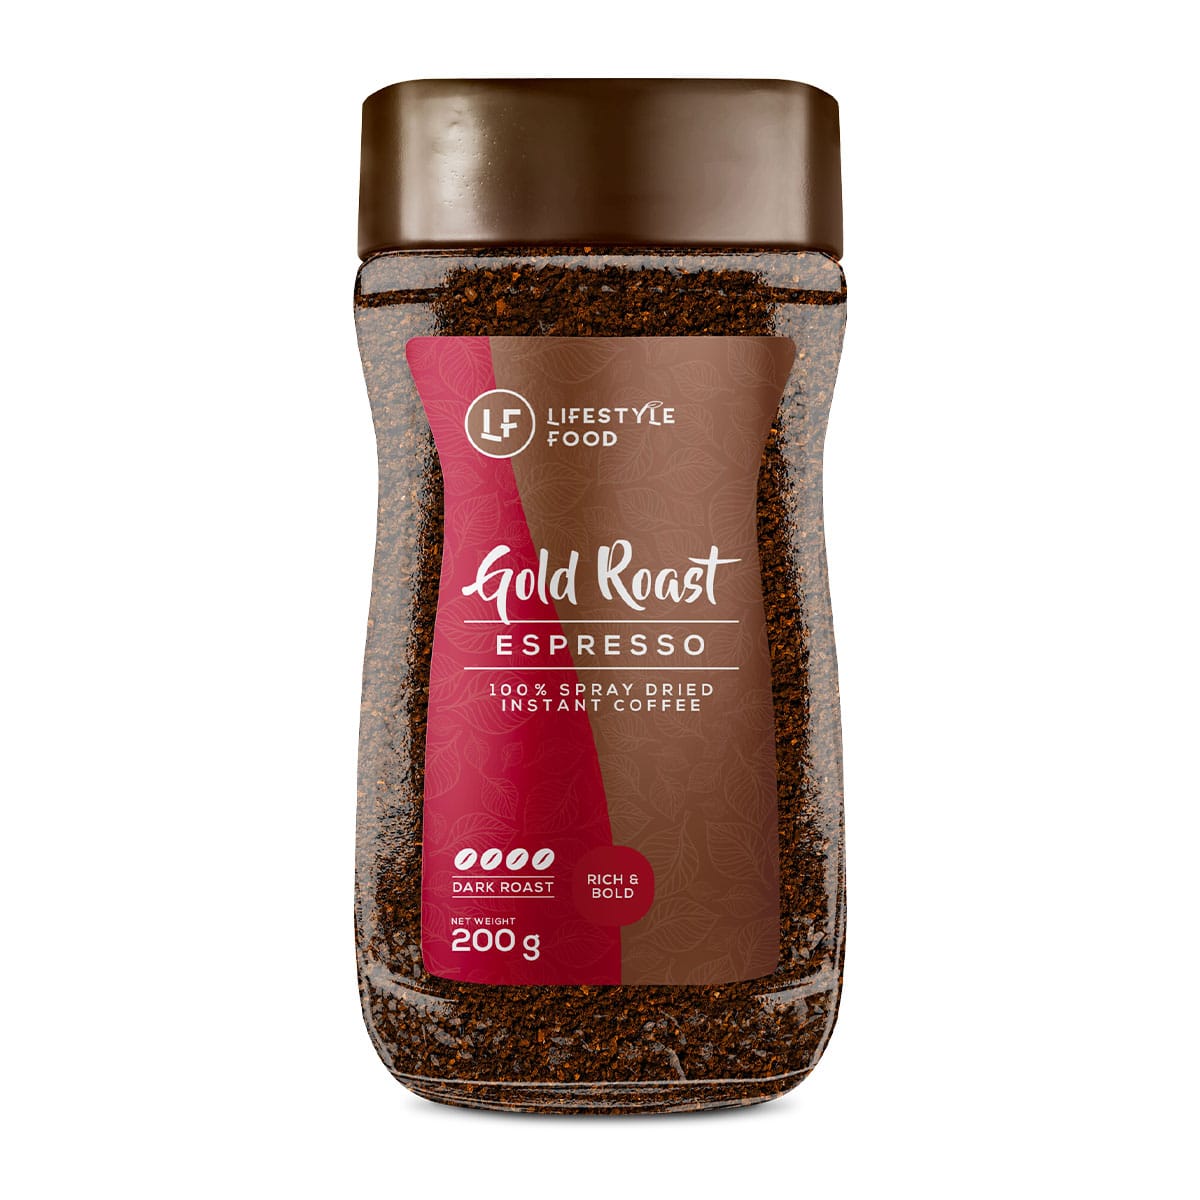 Lifestyle Food Gold Roast Espresso Instant Coffee - 200g